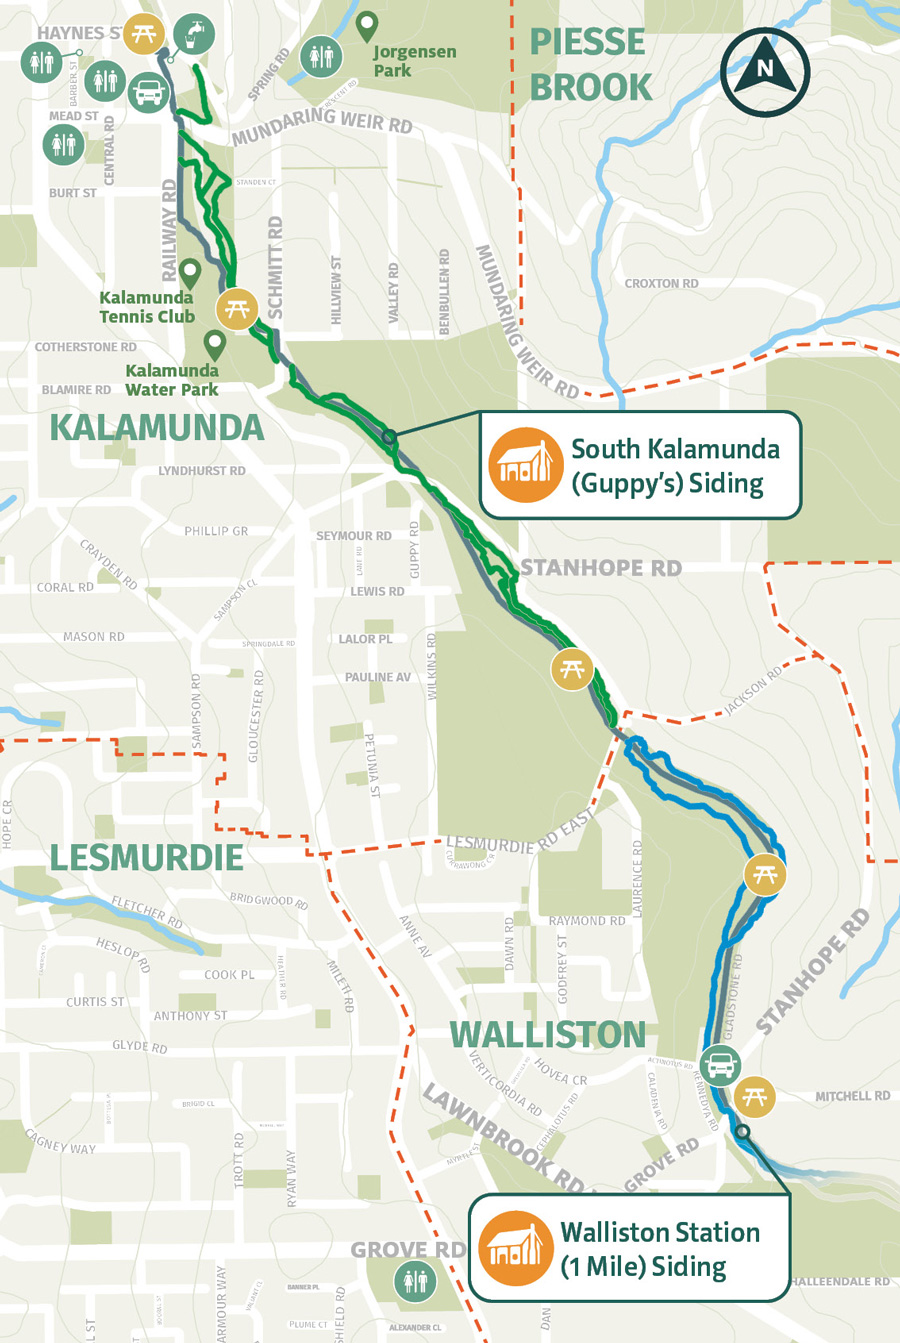 Kalamunda Railway Heritage Trail - Mundaring Weir Road to Grove Road Map Overview